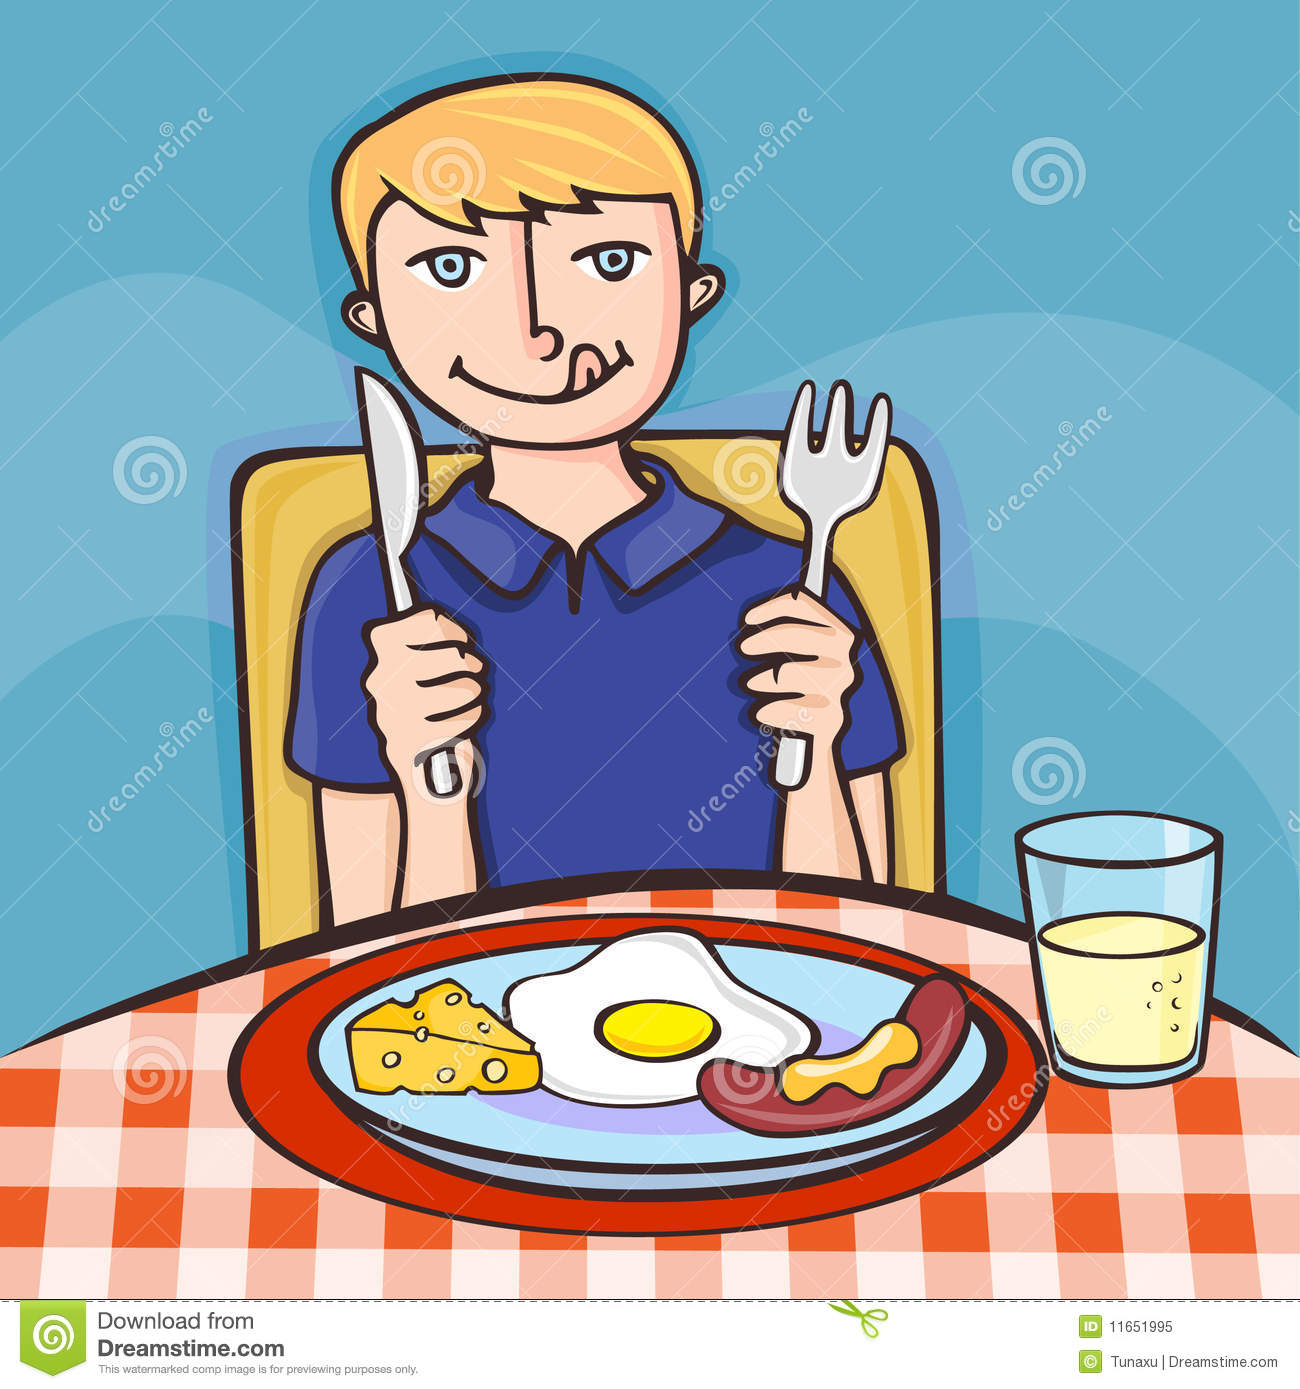 Girl Eating Breakfast Cartoon